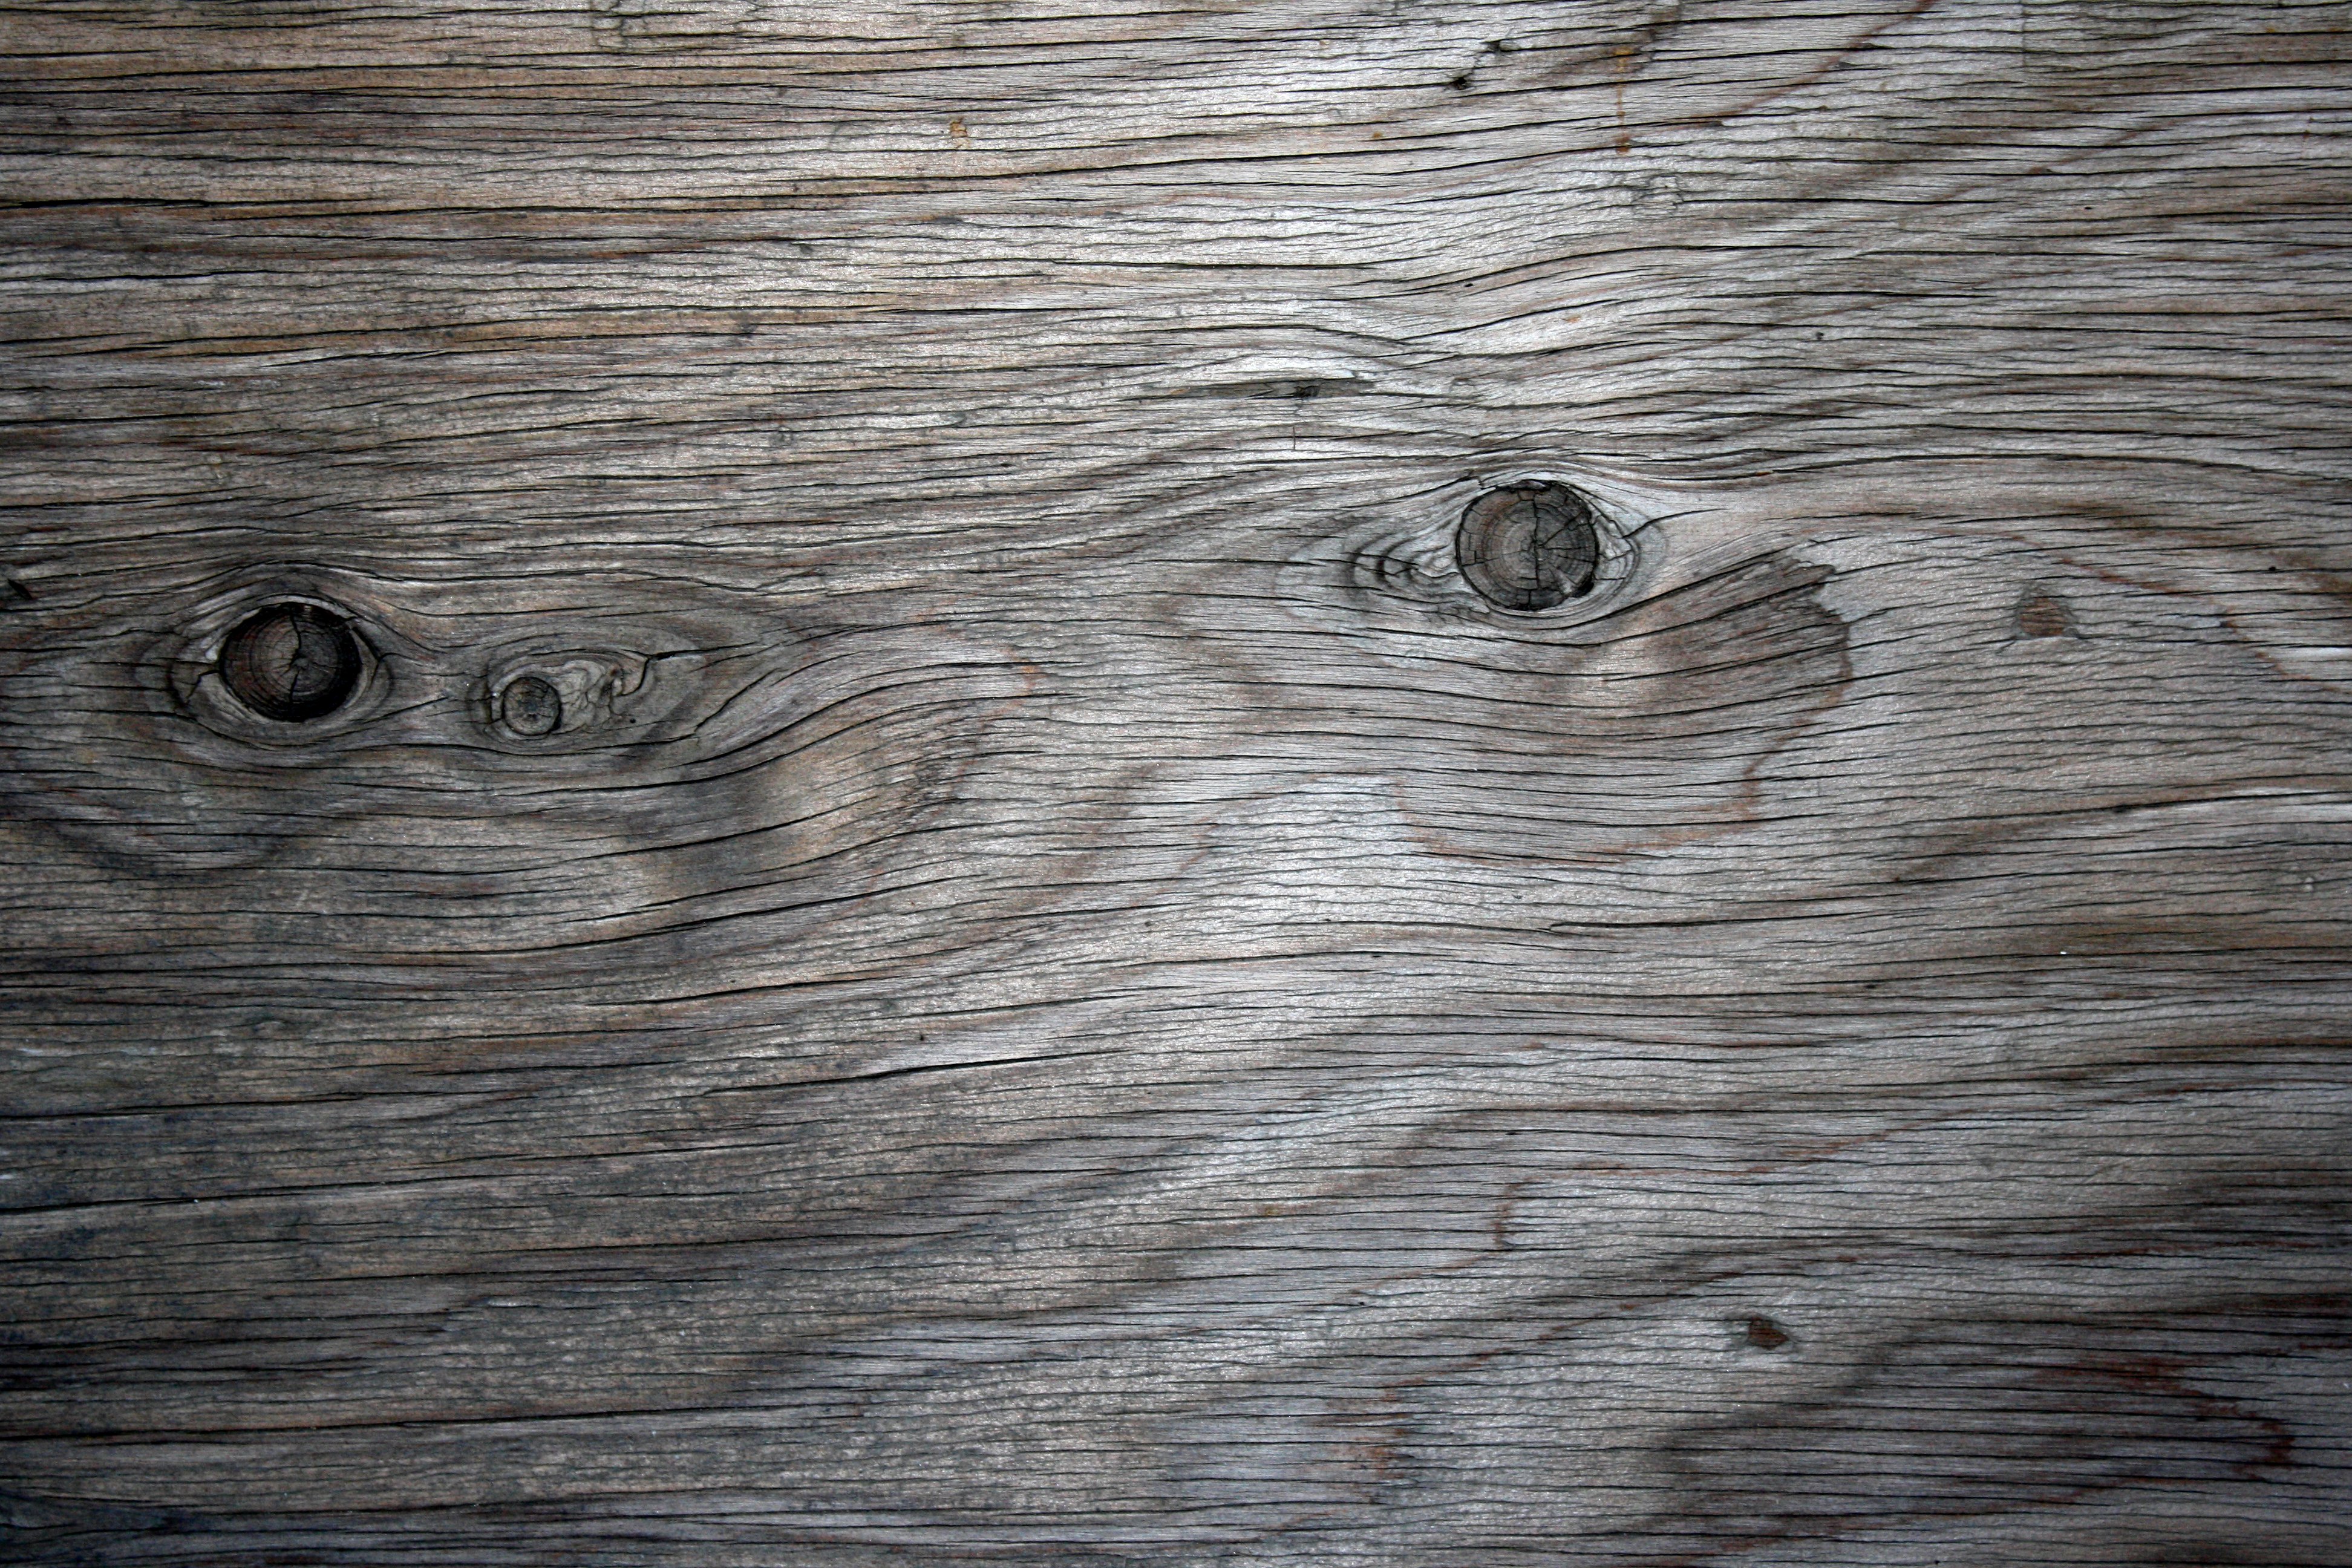 Weathered Wood Grain Texture Jpg